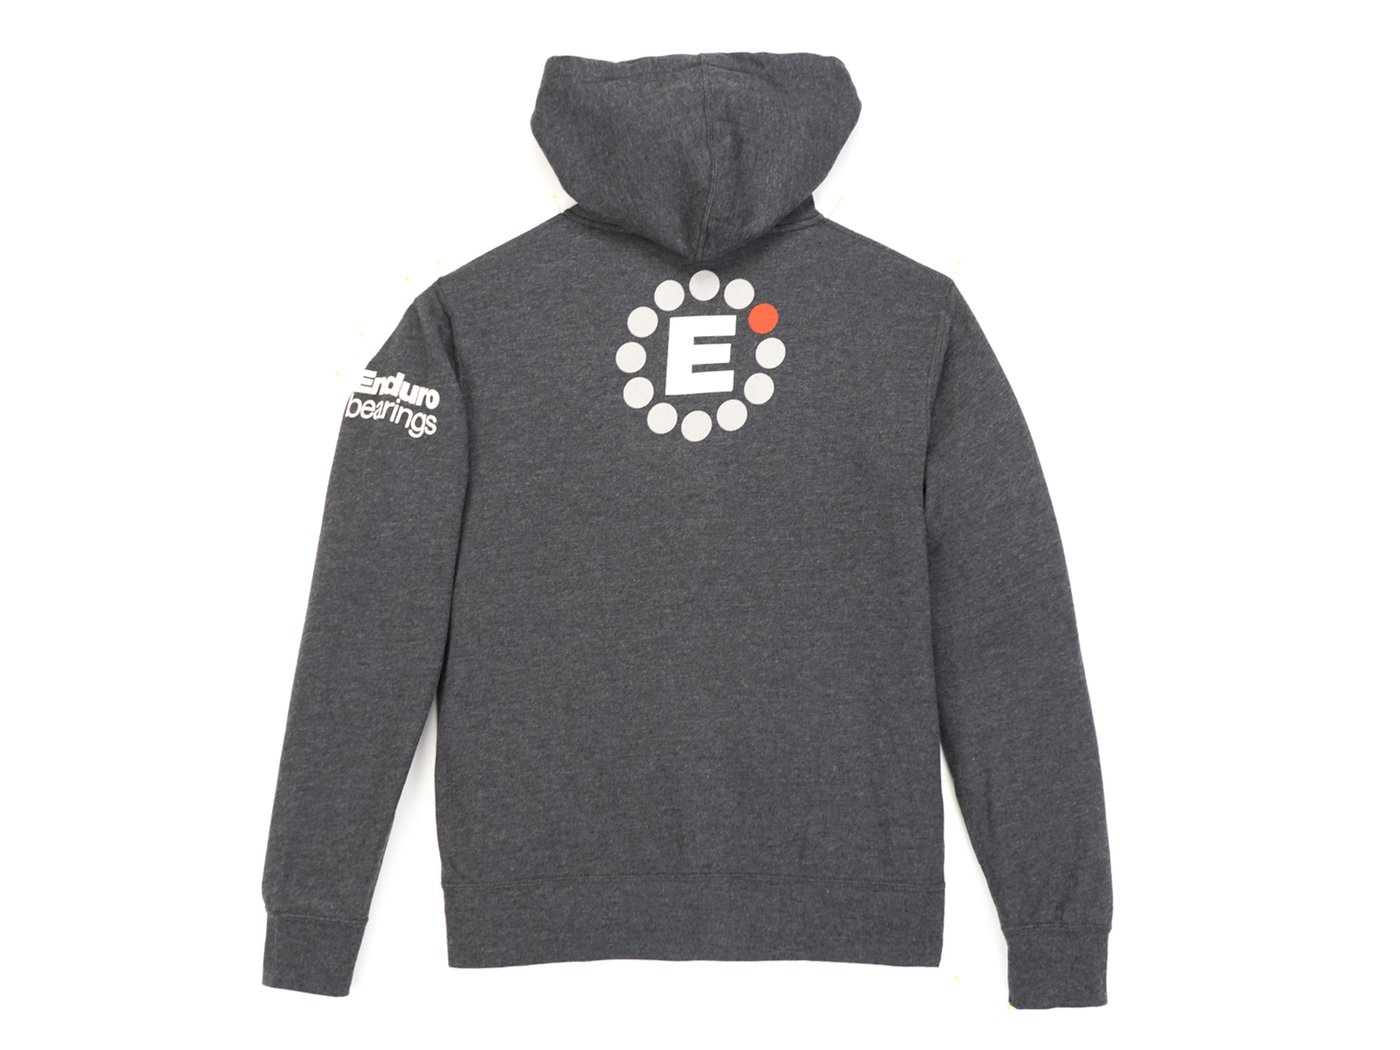 Enduro Bearings Hoodie | Independent Trading Company | full zip, long sleeve | unisex | dark gray heather - back